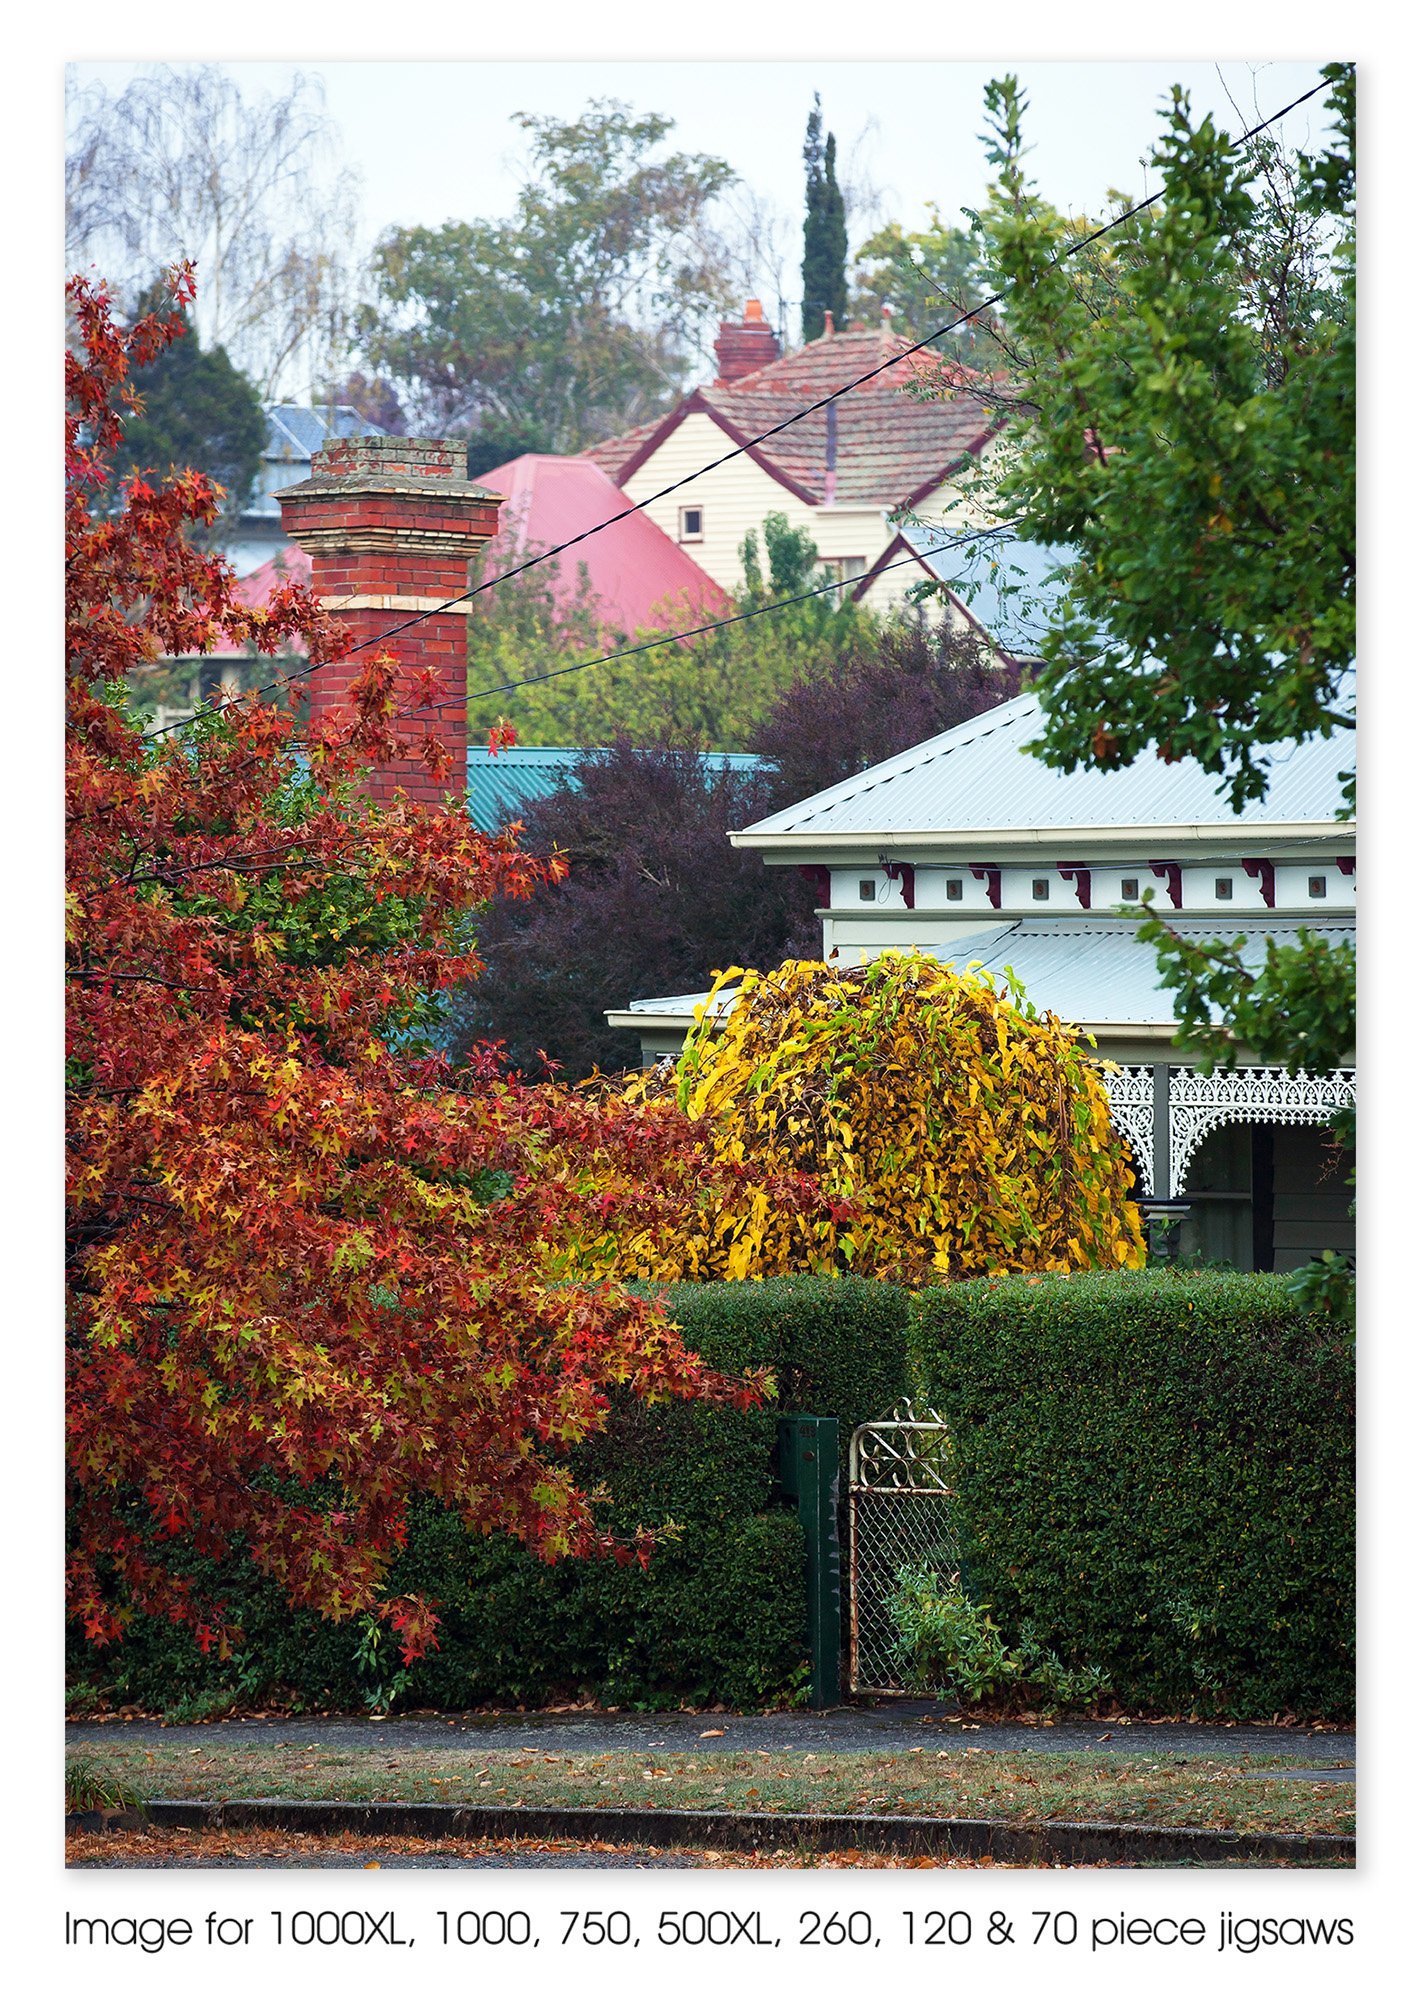 Soldiers Hills Streets, Ballarat VIC